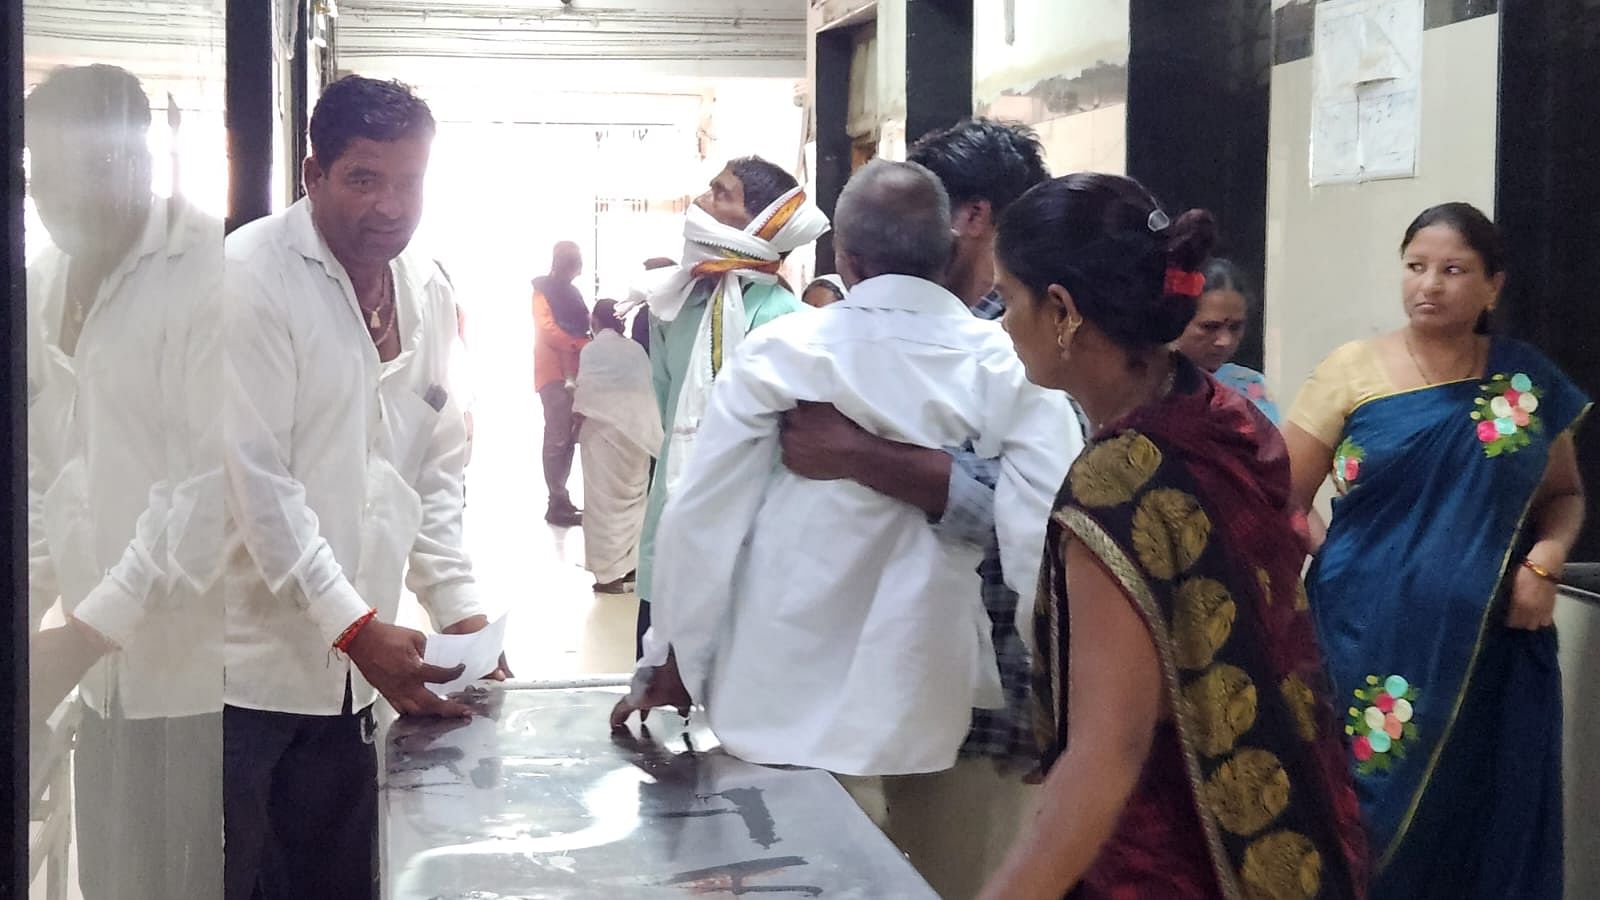 Relatives put a patient on a stretcher | Purva Chitnis | ThePrint